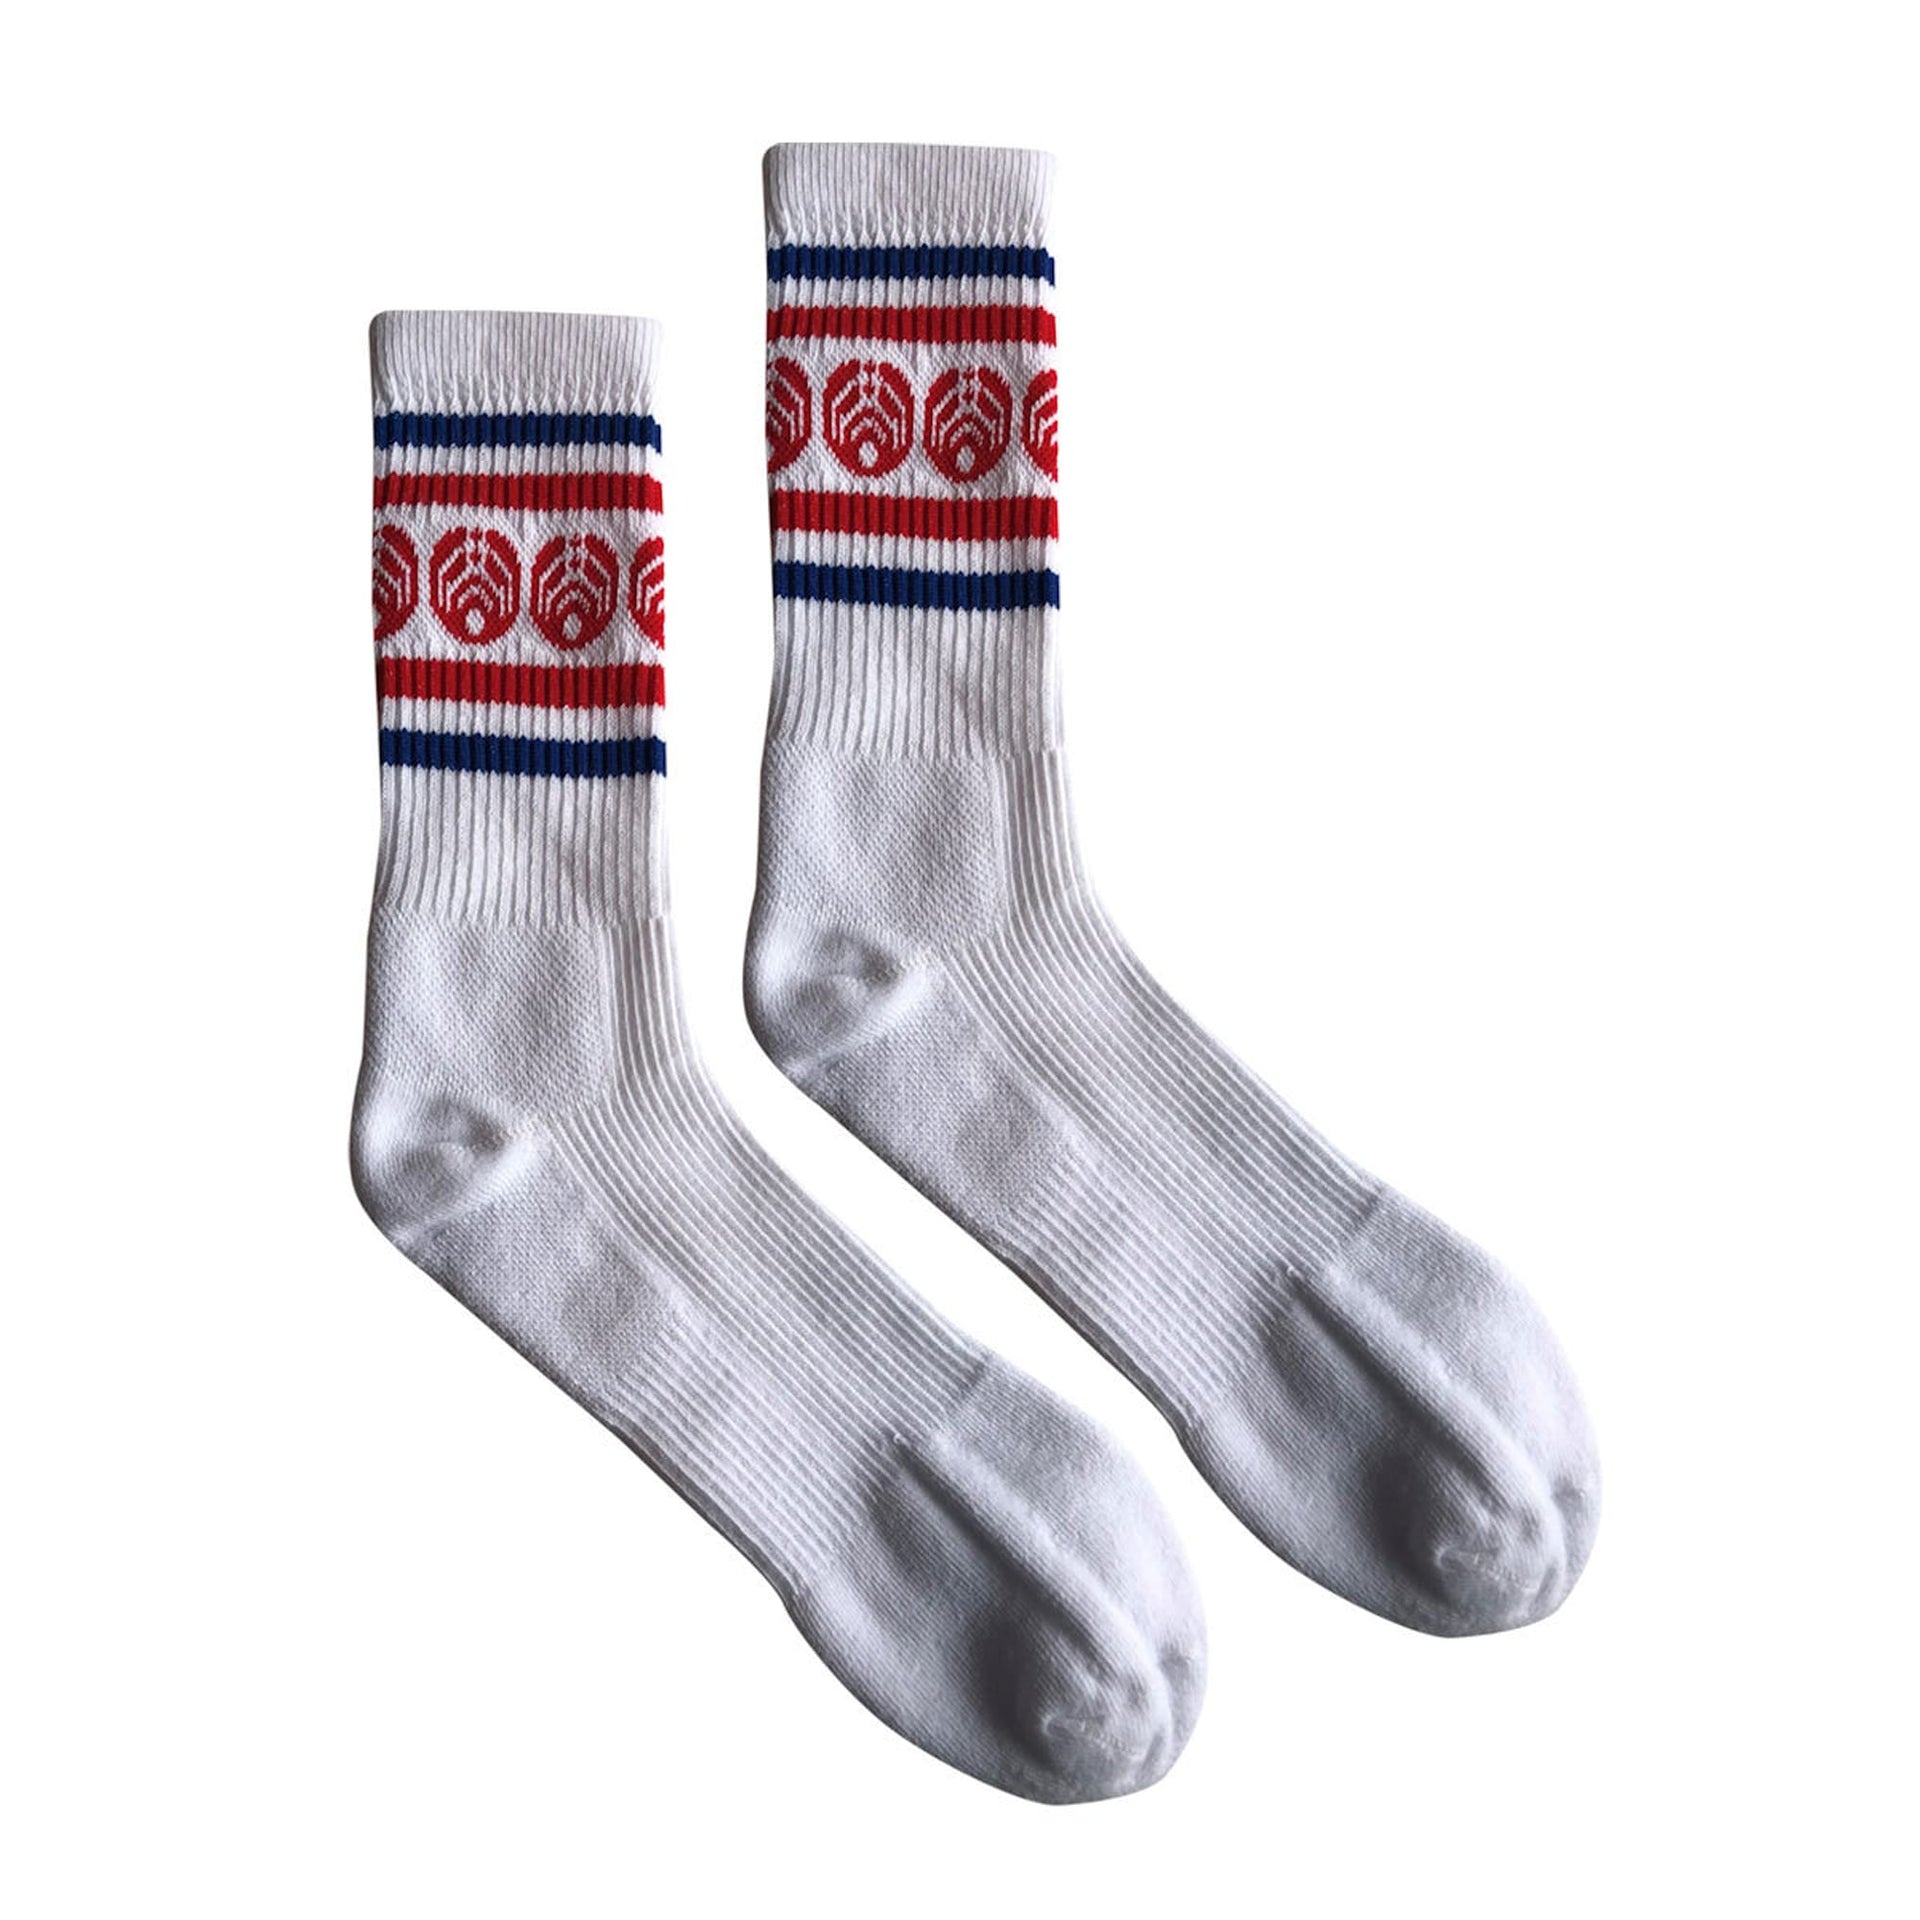 Retro Athletic Socks